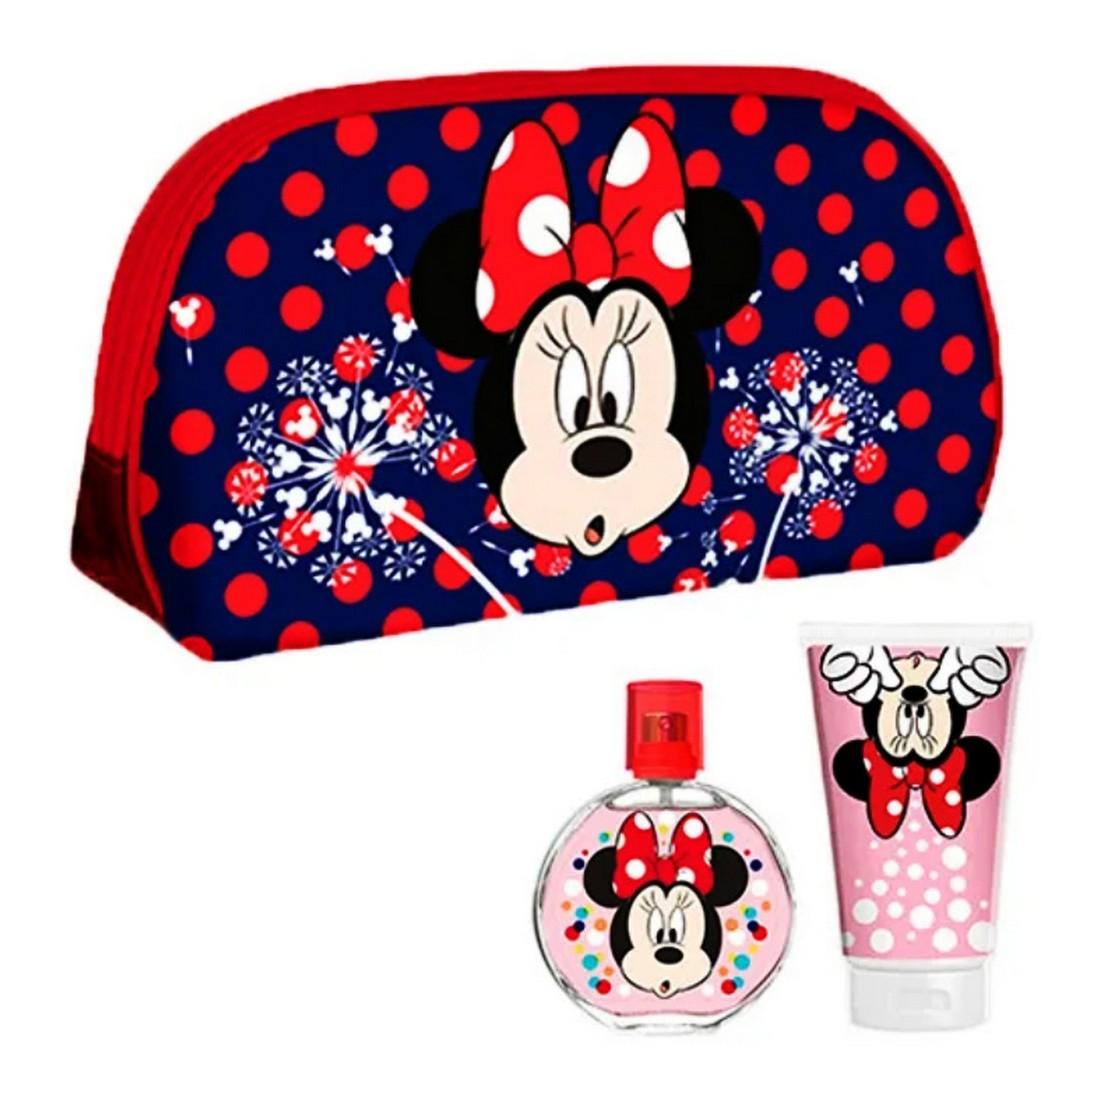 Parfume sæt til børn Minnie Mouse (3 stk)